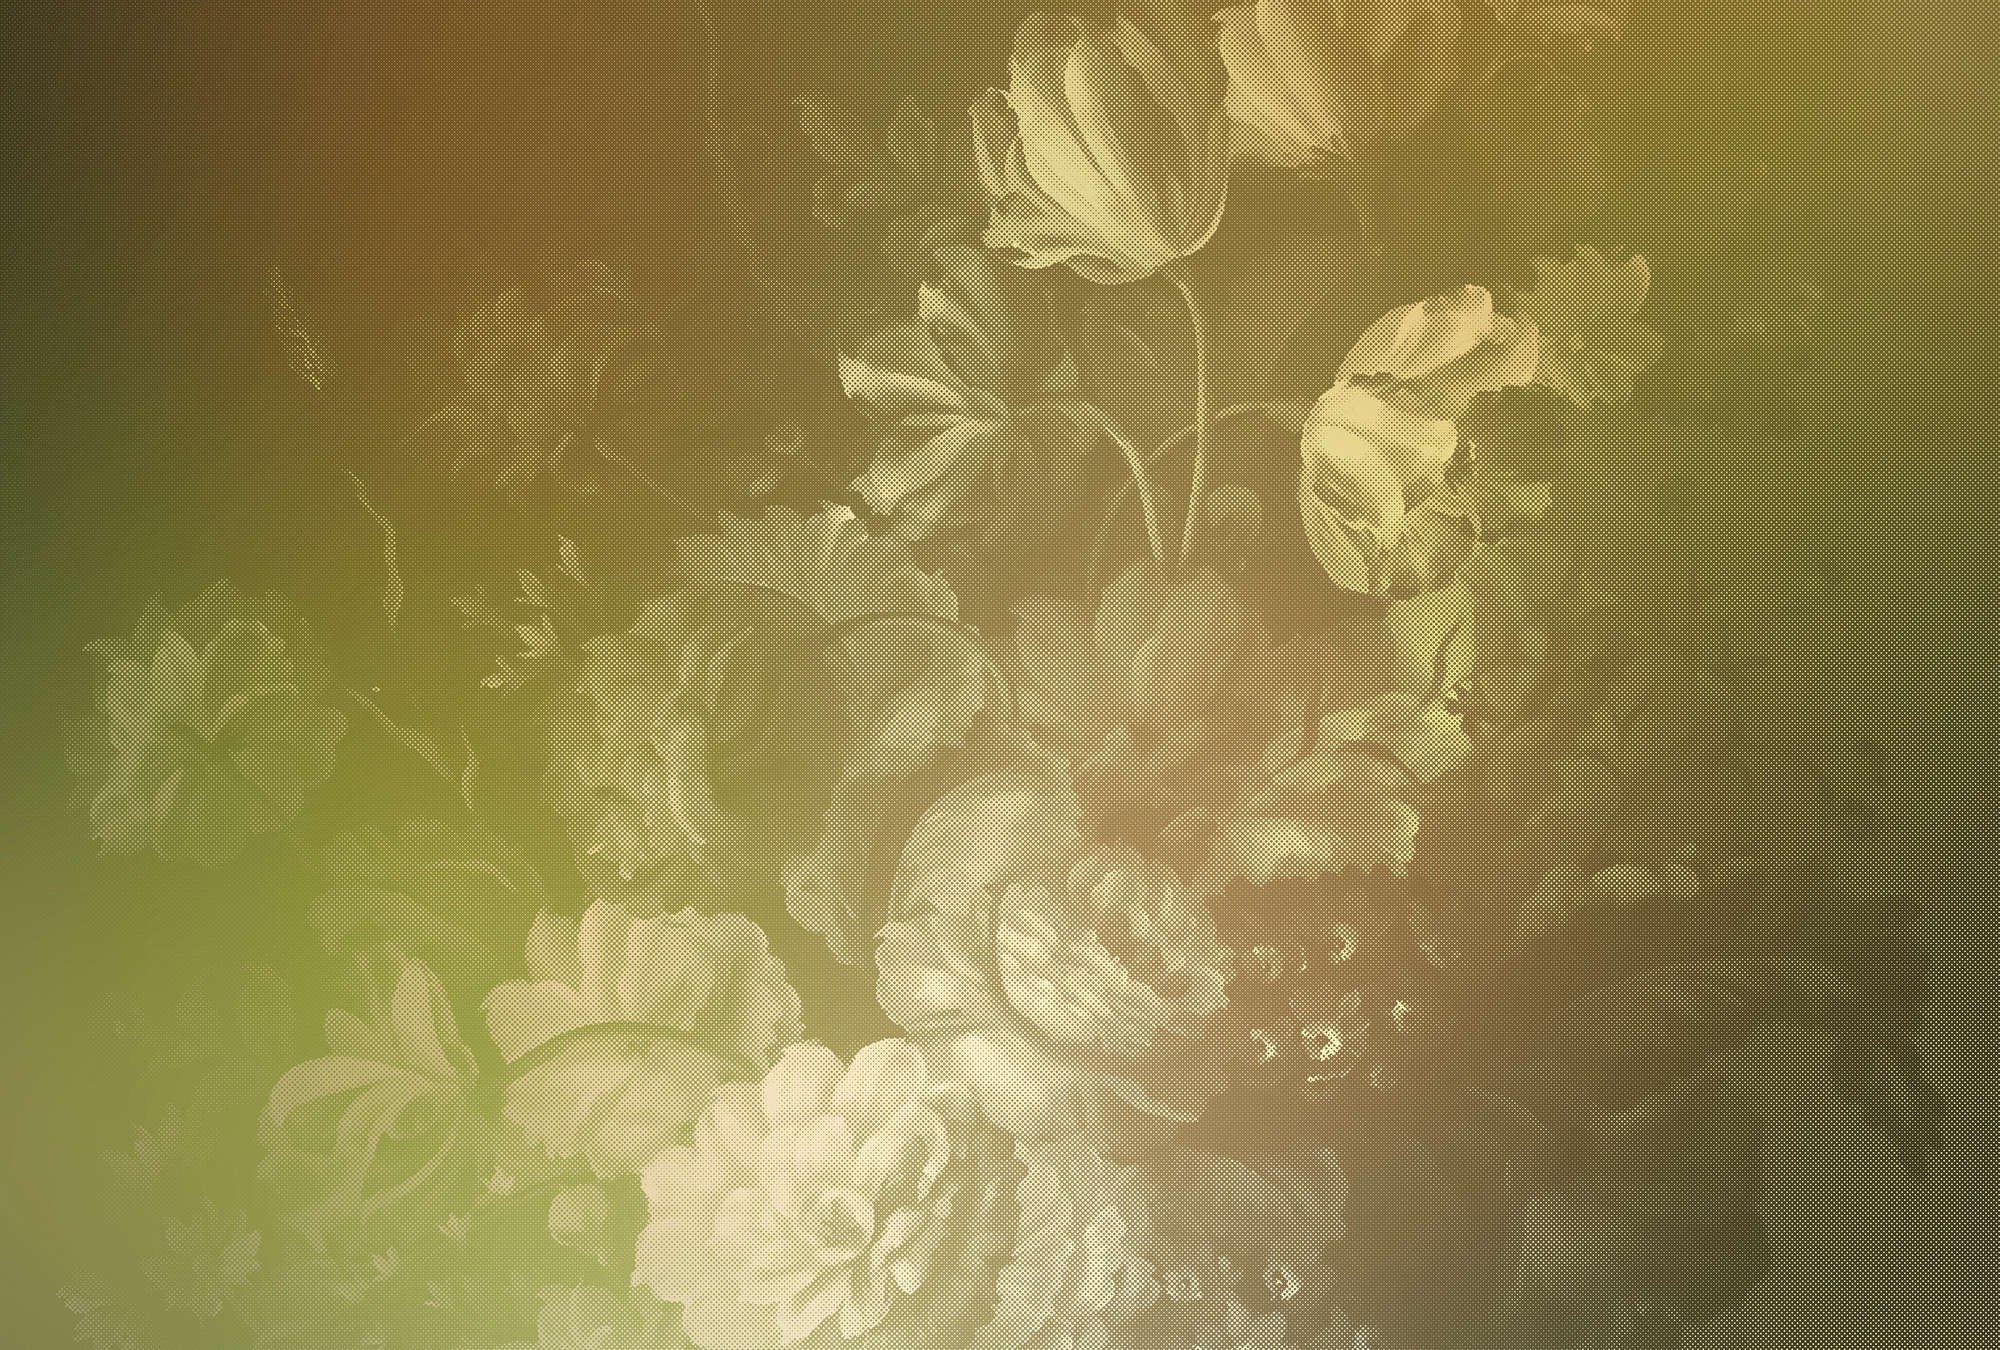             Pastello olandese 2 - Fotomurali con bouquet di rose in stile arte olandese - Giallo | Pile liscio premium
        